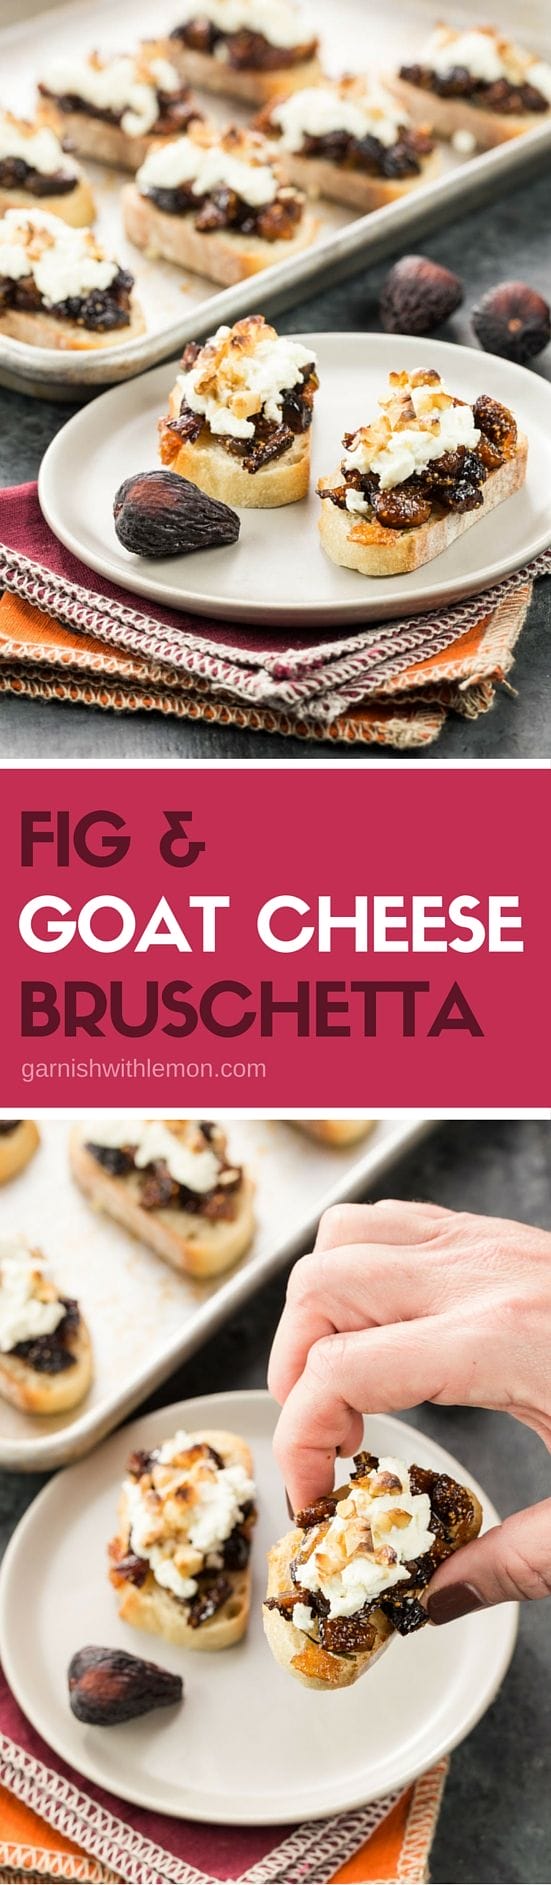 Fig & Goat Cheese Bruschetta